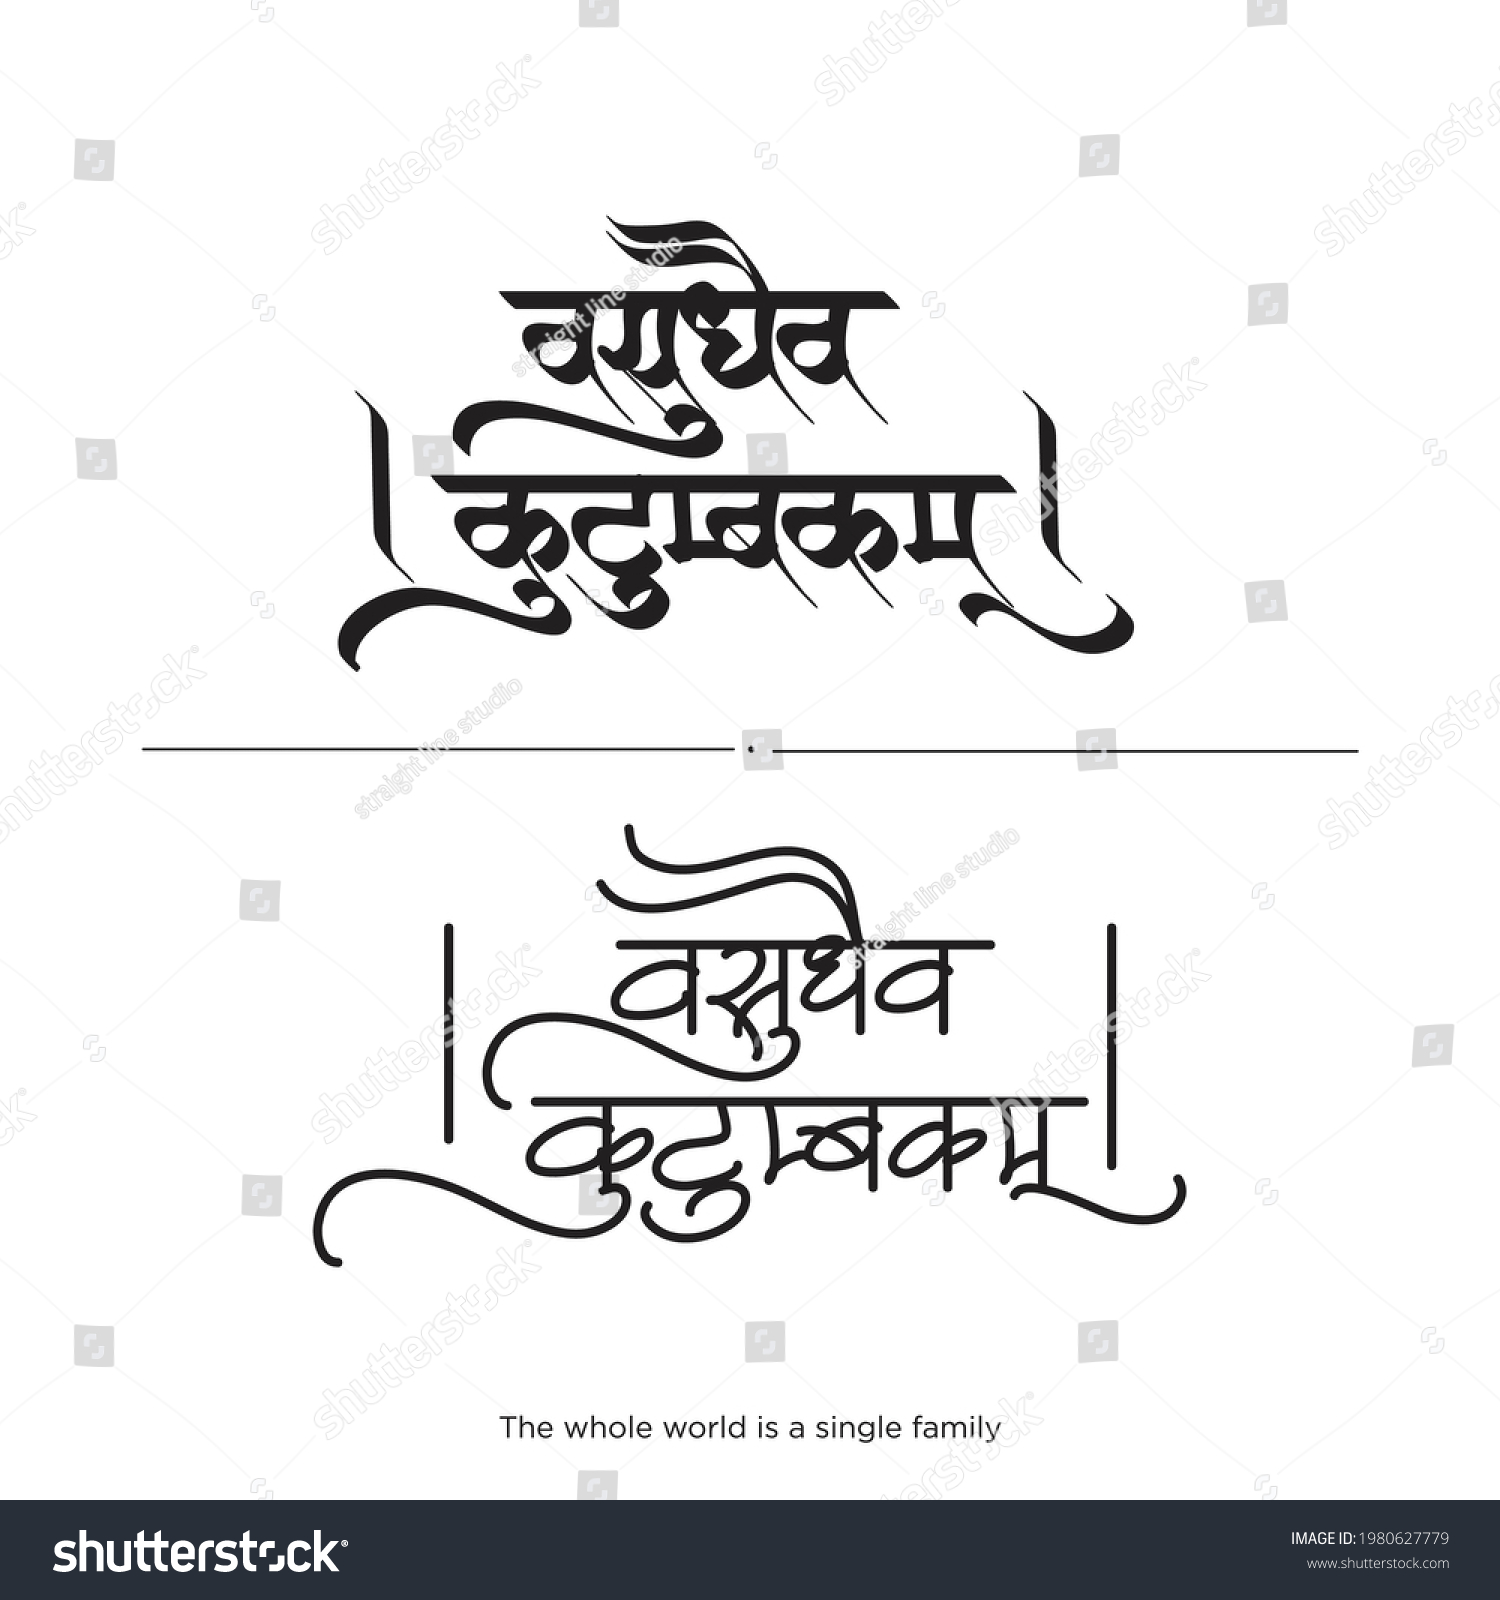 SVG of vector handmade Devanagari calligraphy of Sanskrit word 